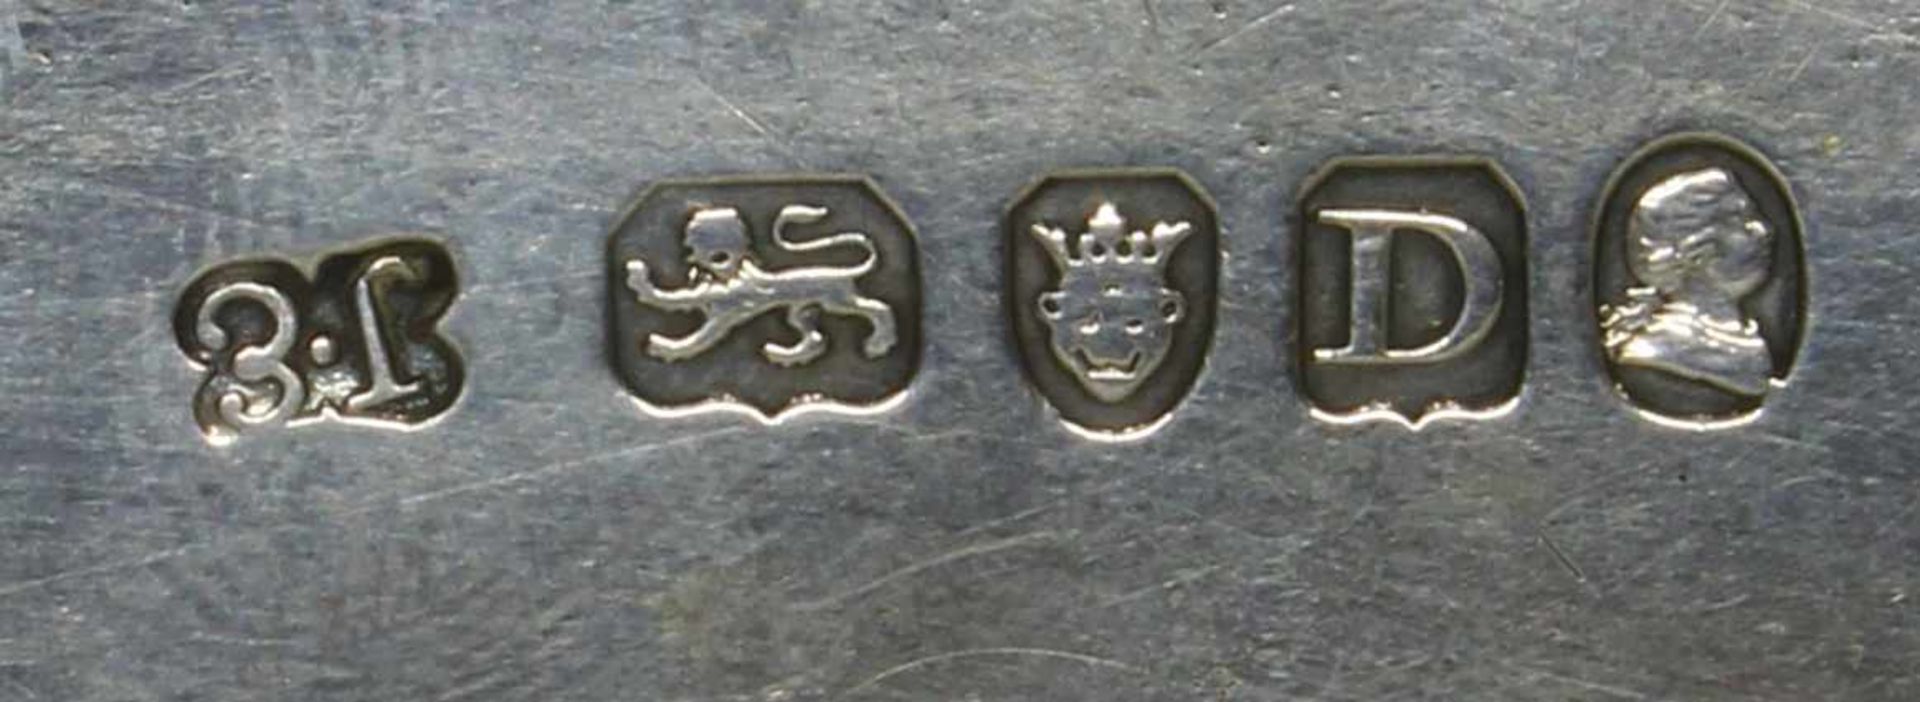 Salver, Silber 925, London, 1799, John Emes, oval, Spiegel mit Spiralband und Emblem, Profilrand, - Image 6 of 6